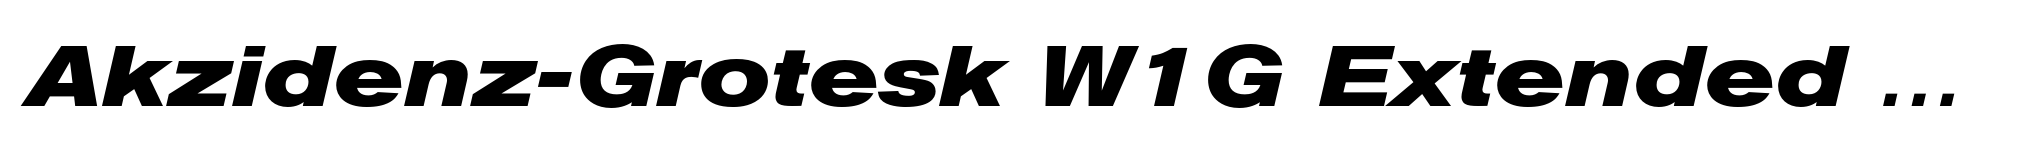 Akzidenz-Grotesk W1G Extended Bold Italic image